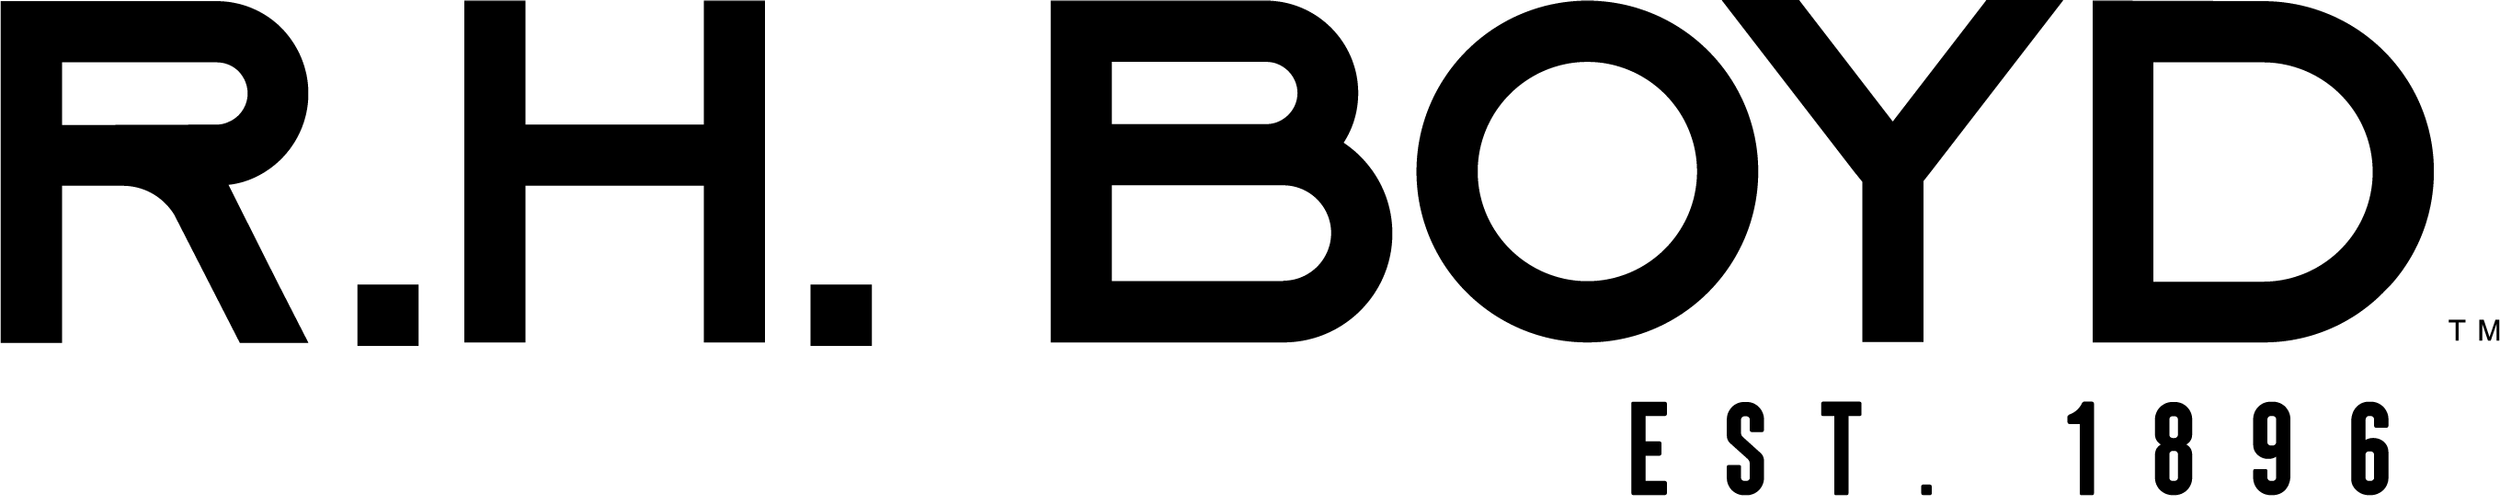 RHB Logo Final Black.png